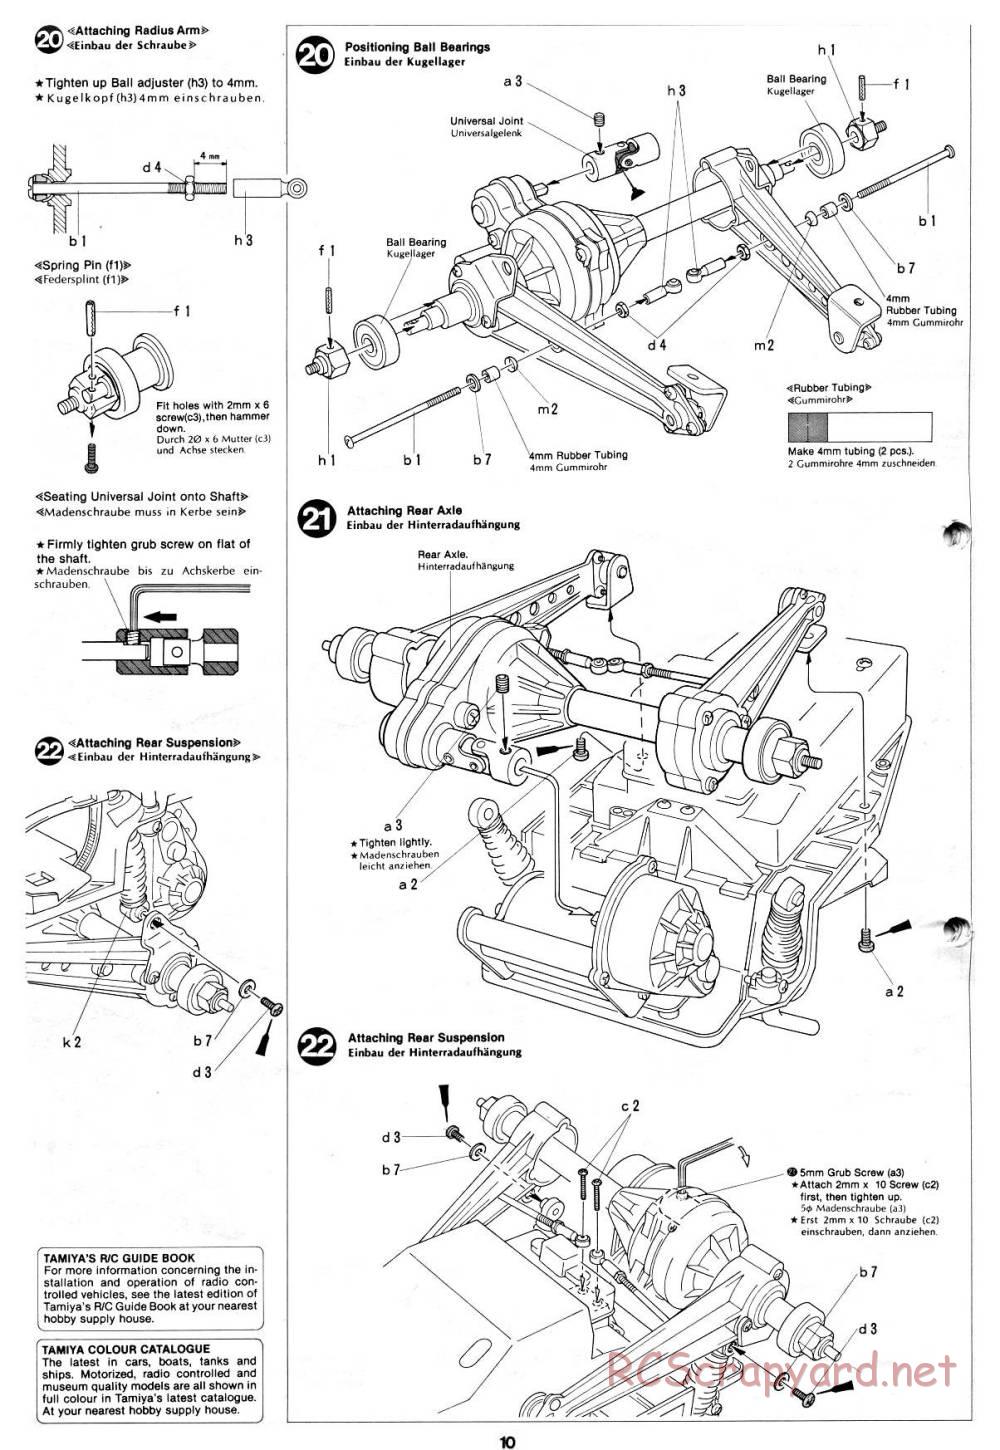 Tamiya - Opel Ascona 400 Rally - 58037 - Manual - Page 10